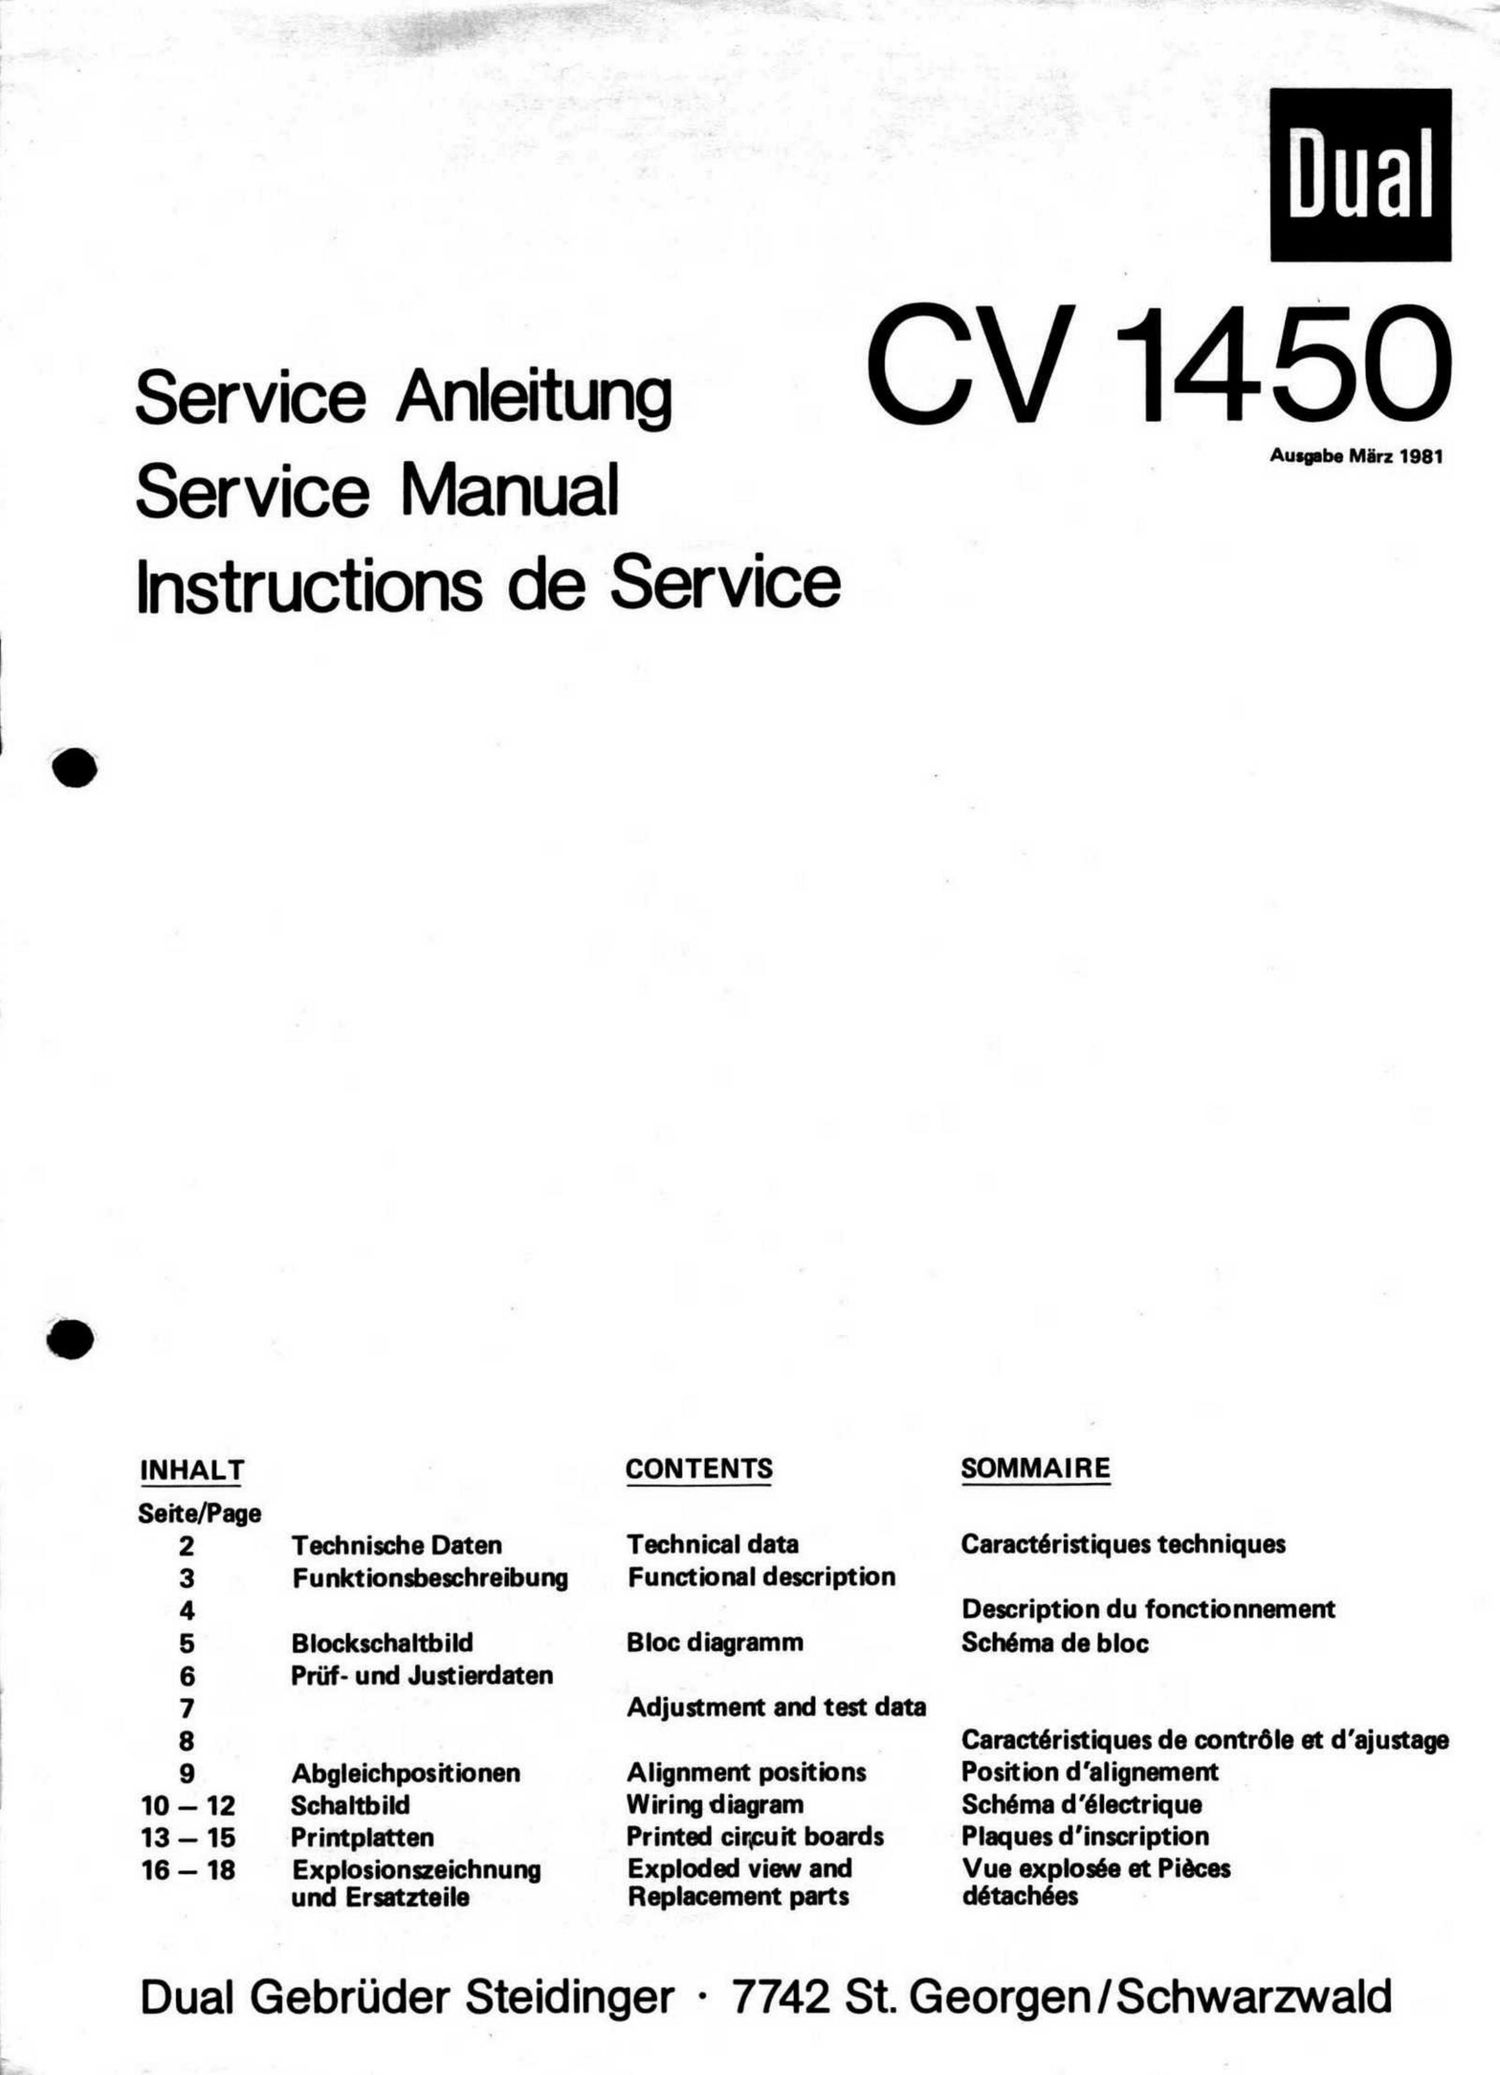 Dual CV 1450 Service Manual (1)